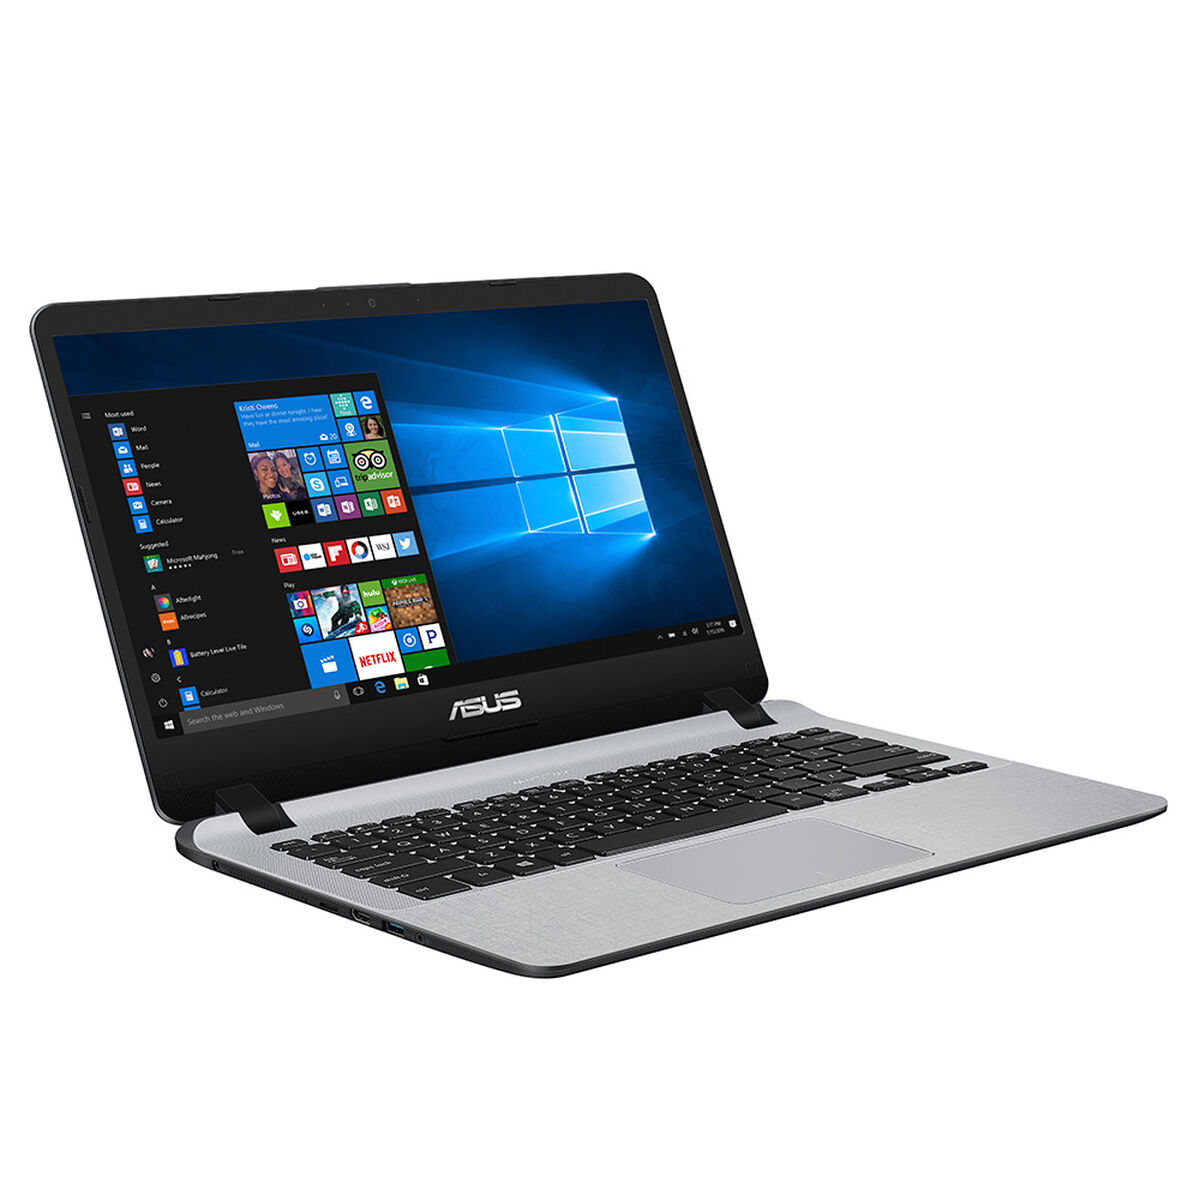 Notebook Asus X407UA-BV316T Core i3 4GB 1TB 14"